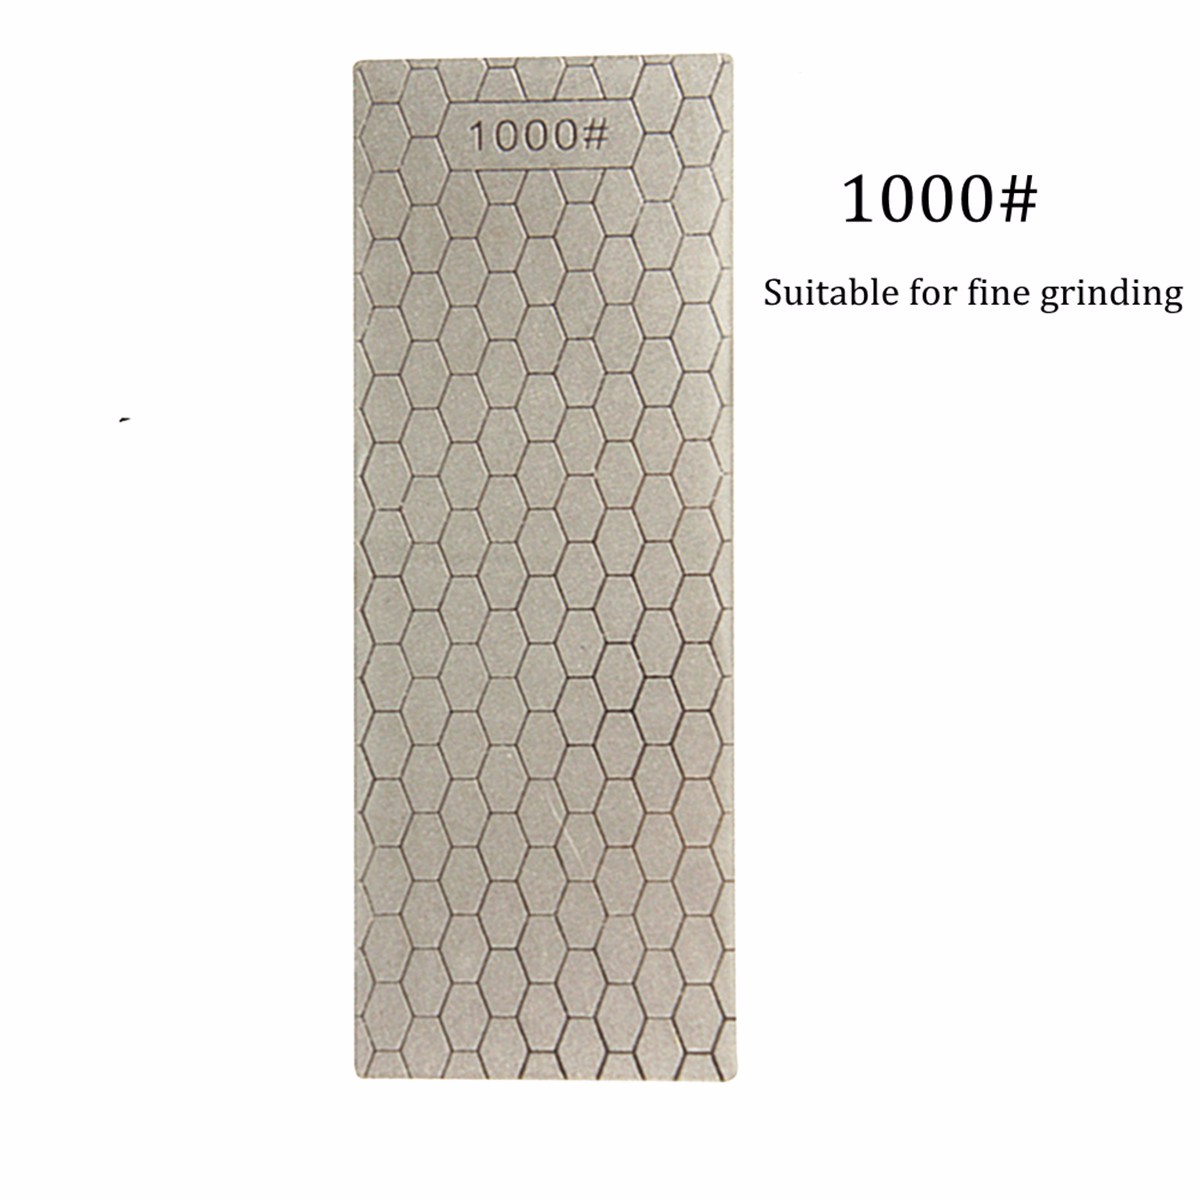 8-Inch-4001000-Grit-Double-Sided-Diamond-Grit-Sharpen-Stone-Sharpening-Whetstone-1779896-2